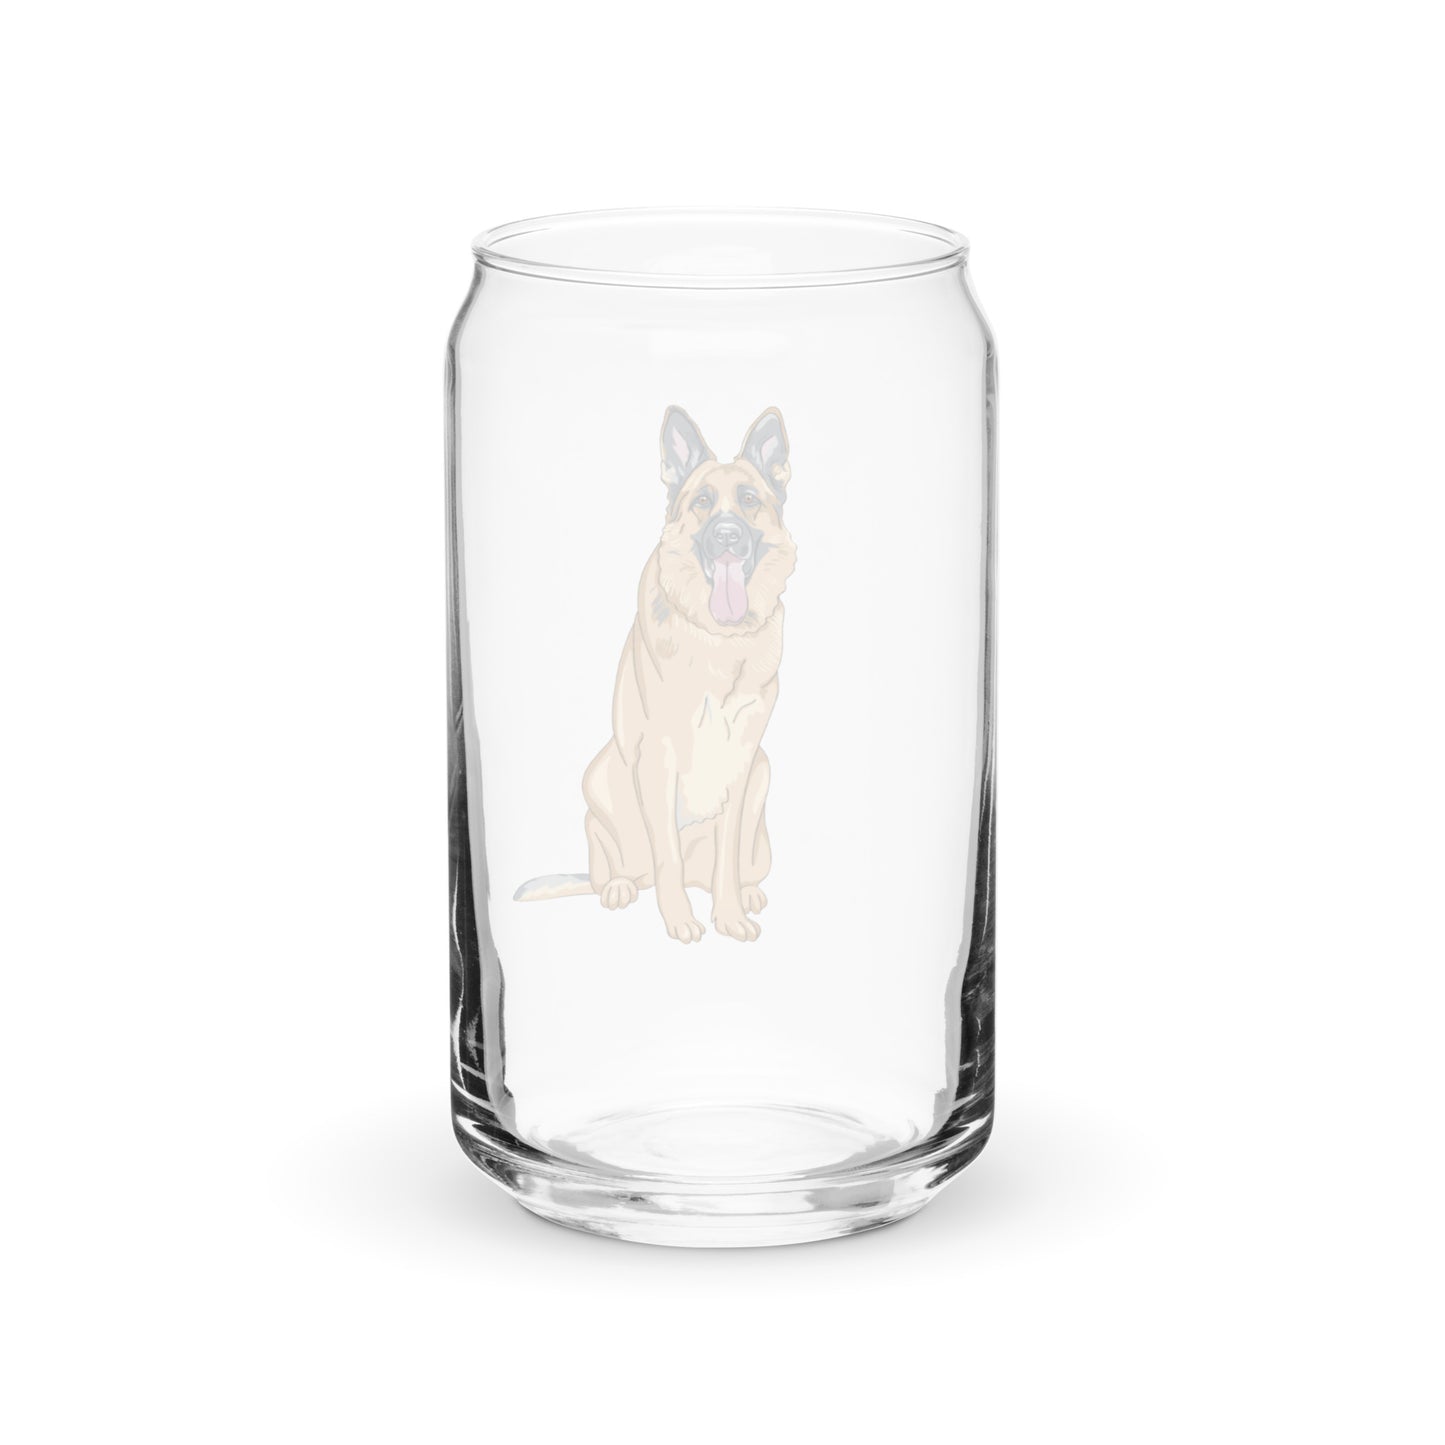 German Shepherd Can-shaped glass